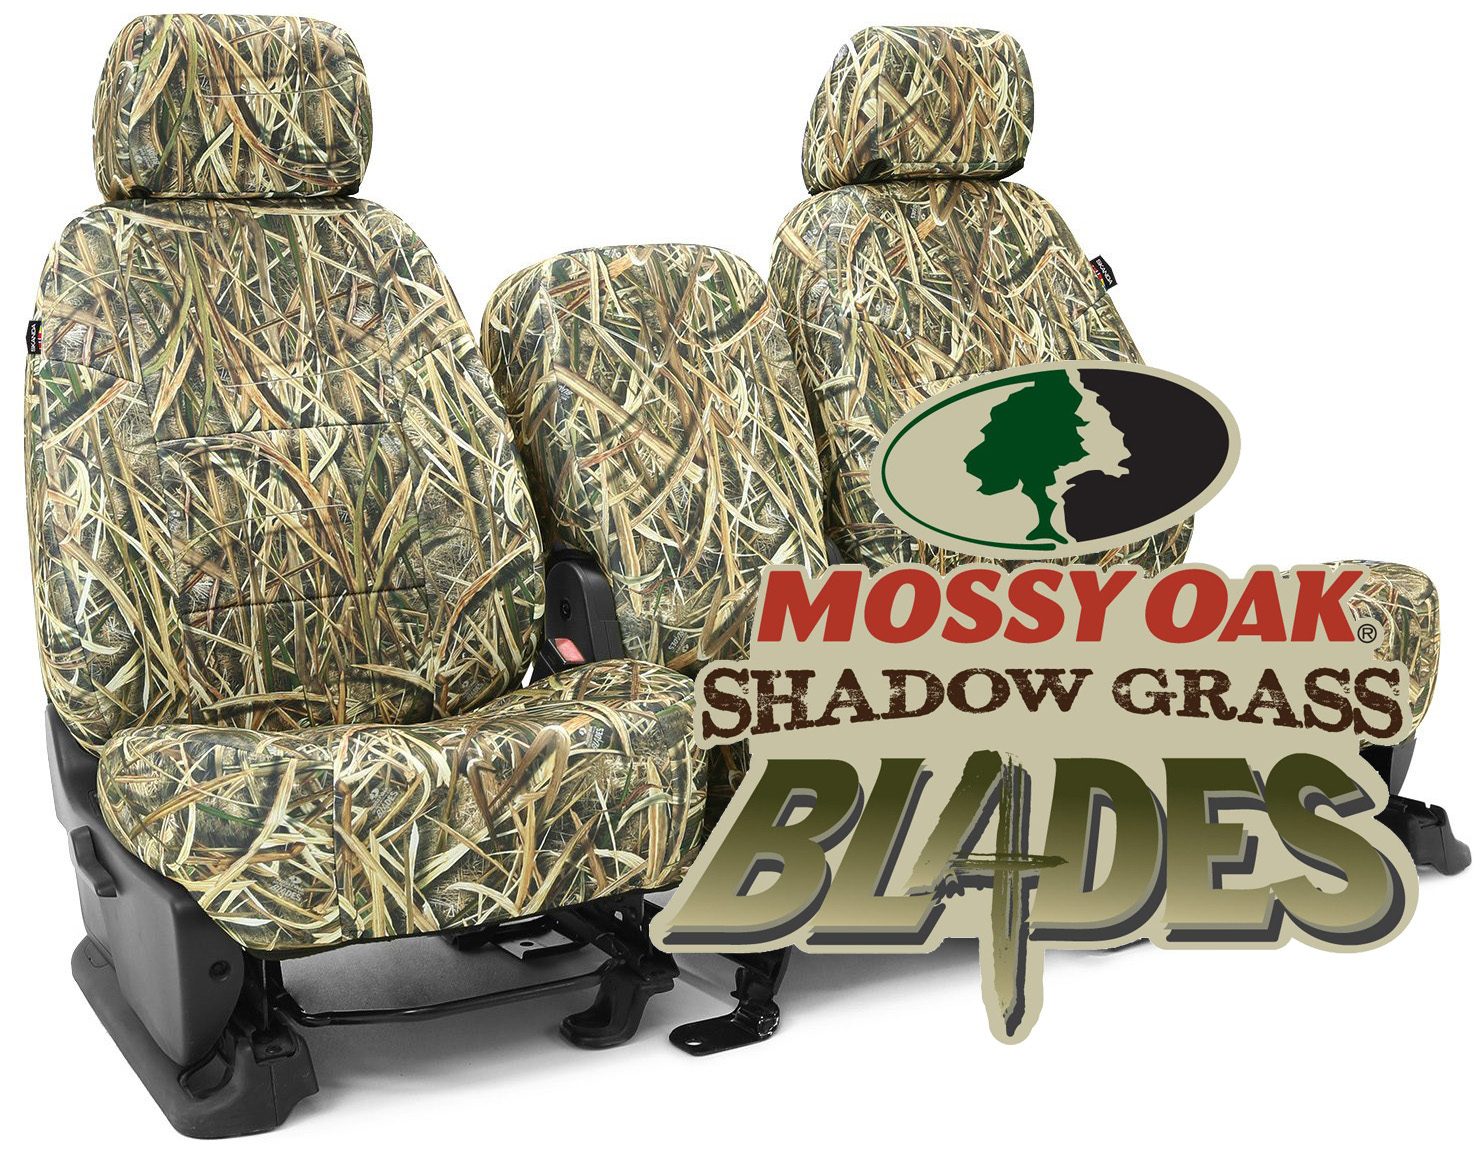 Mossy Oak Shadowgrass Blades seat covers